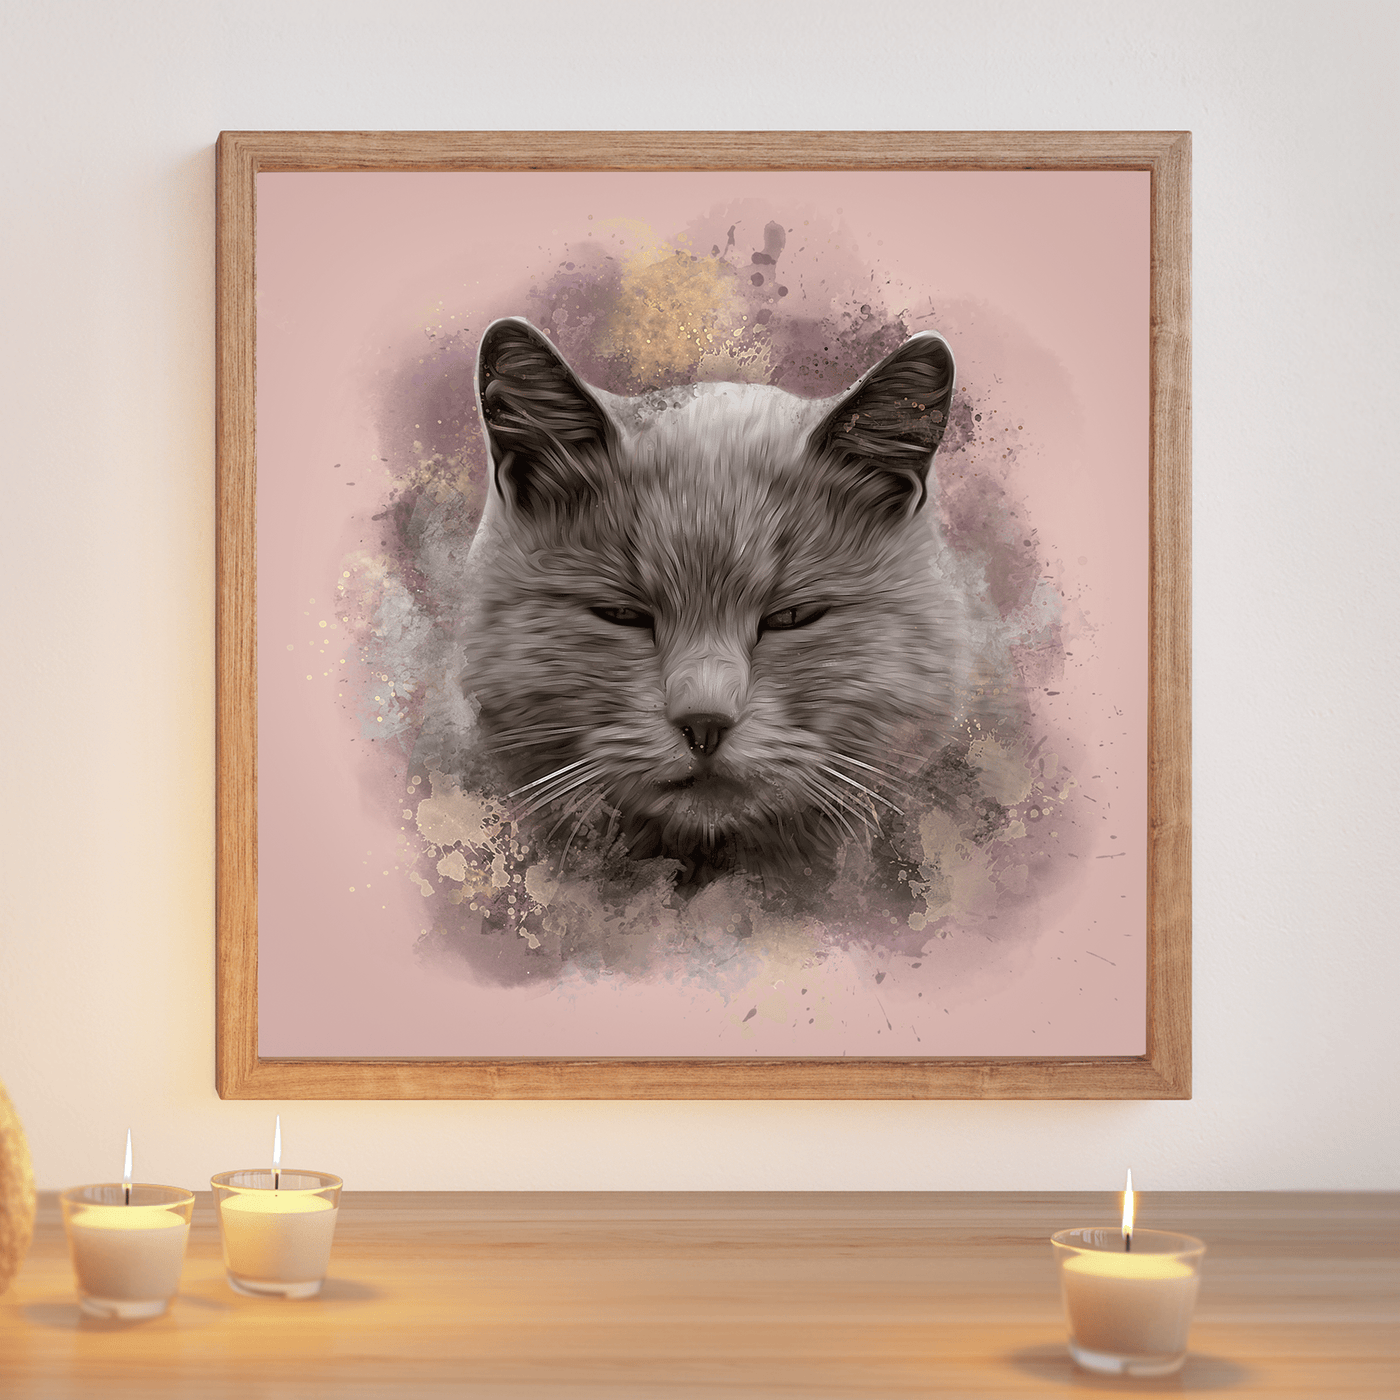 cat digital art of an adorable cat